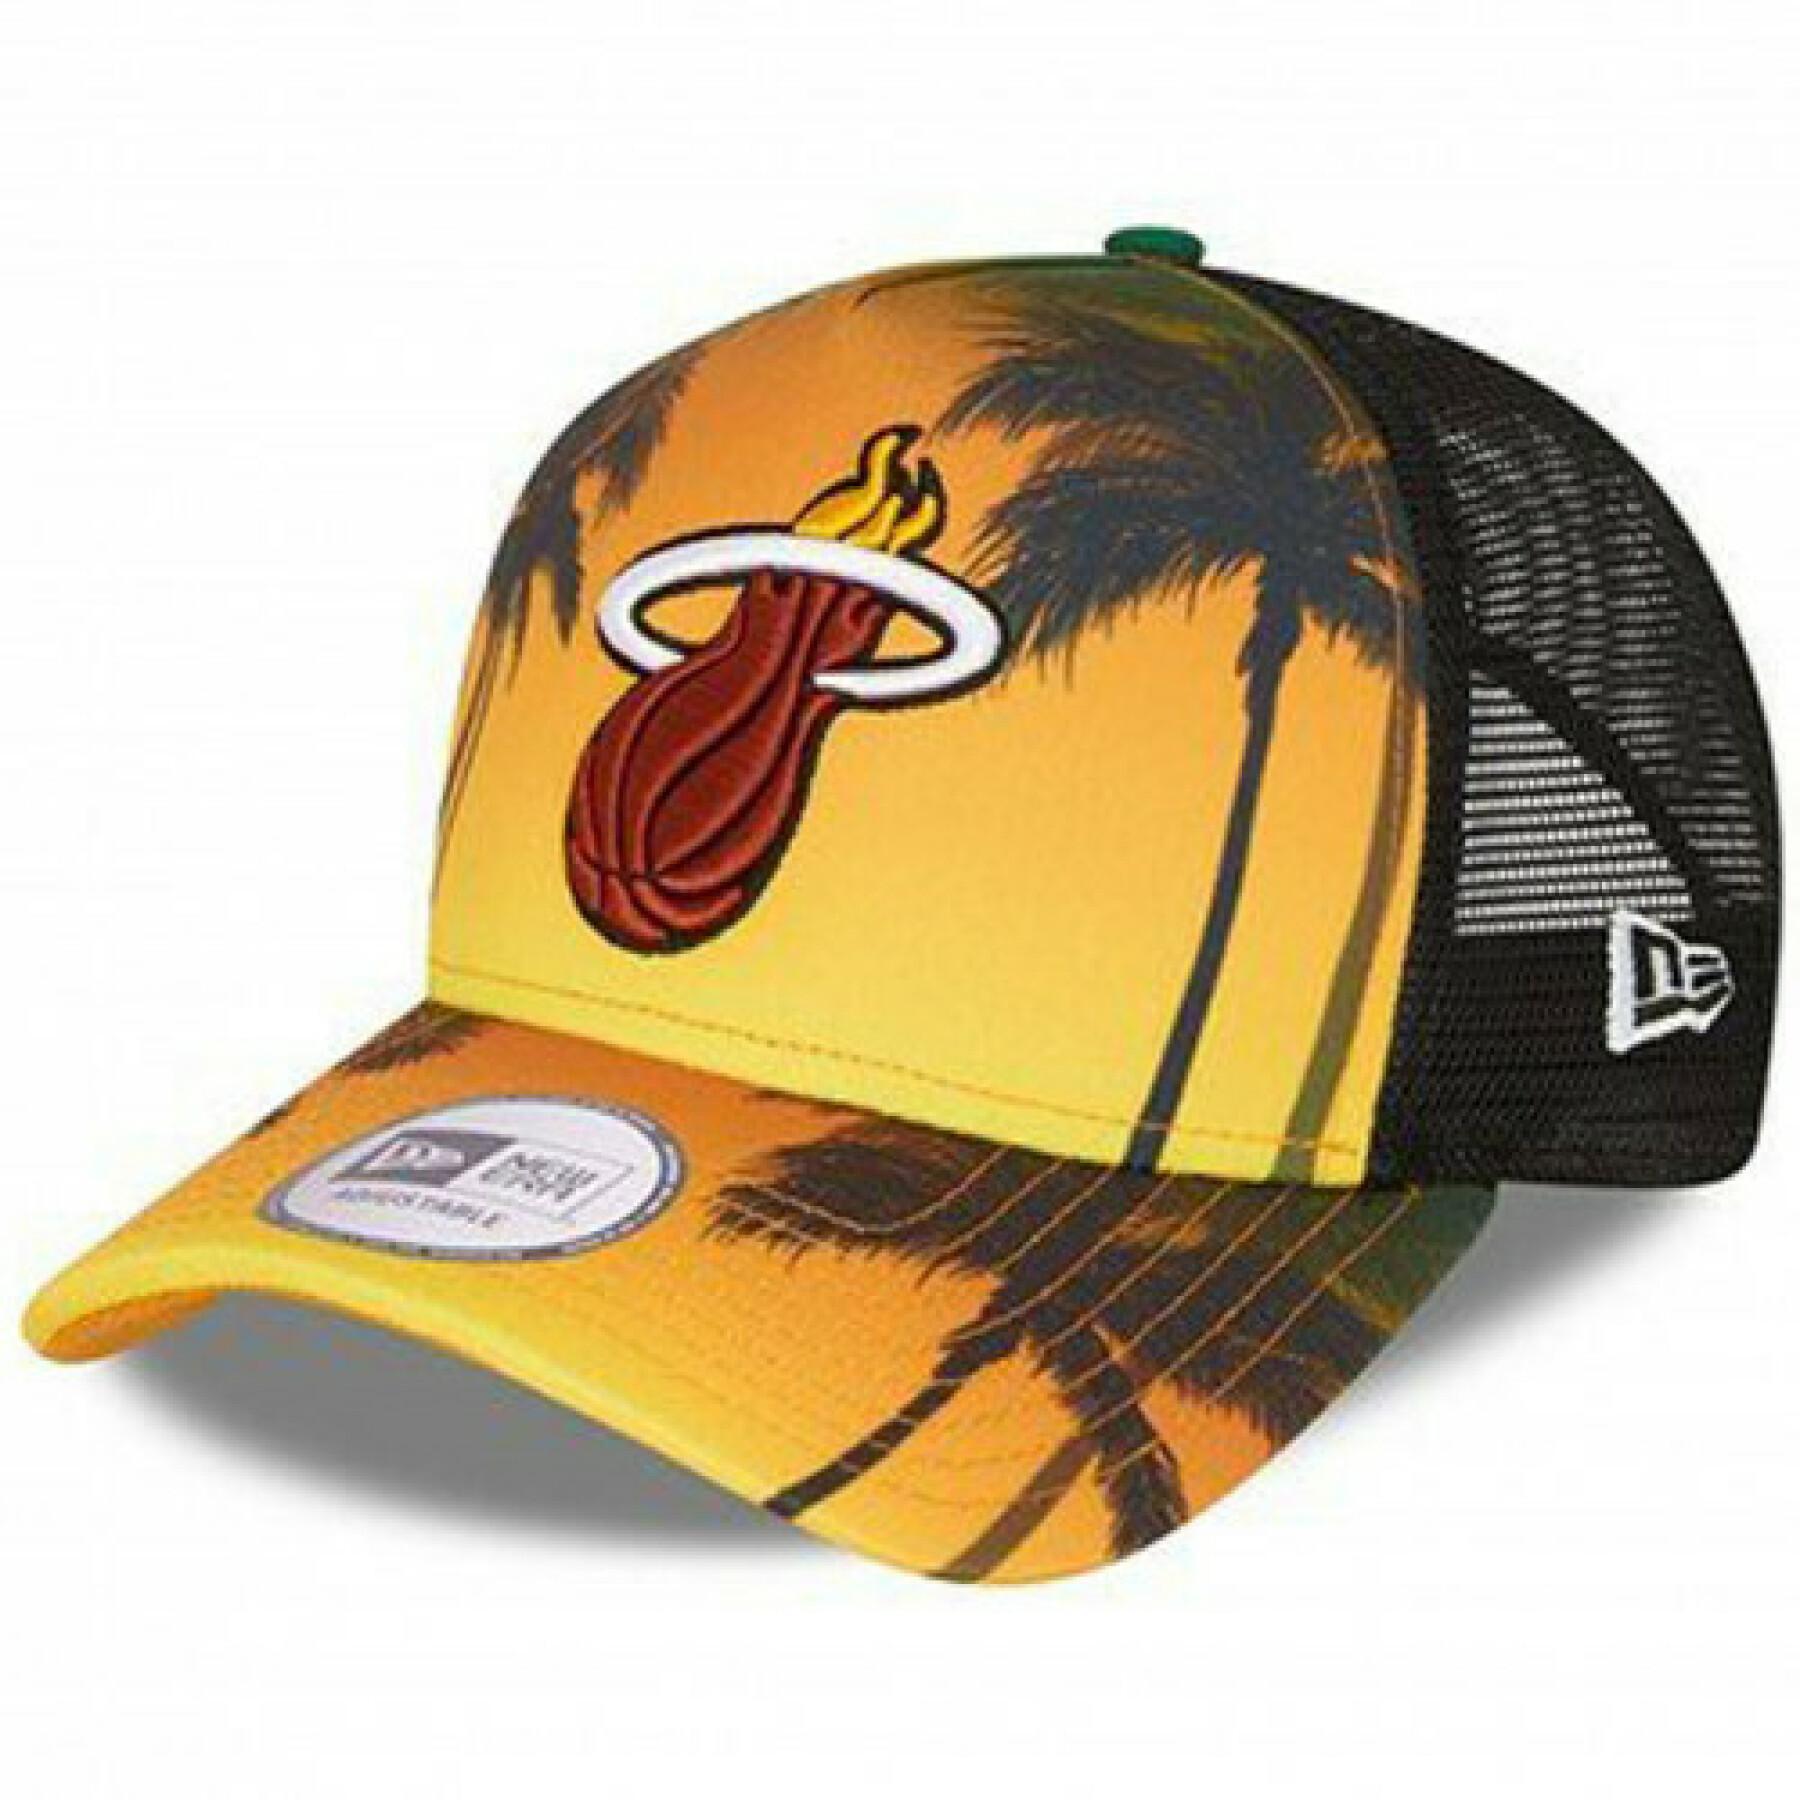 Cap New Era NBA Miami Heat trucker summer city